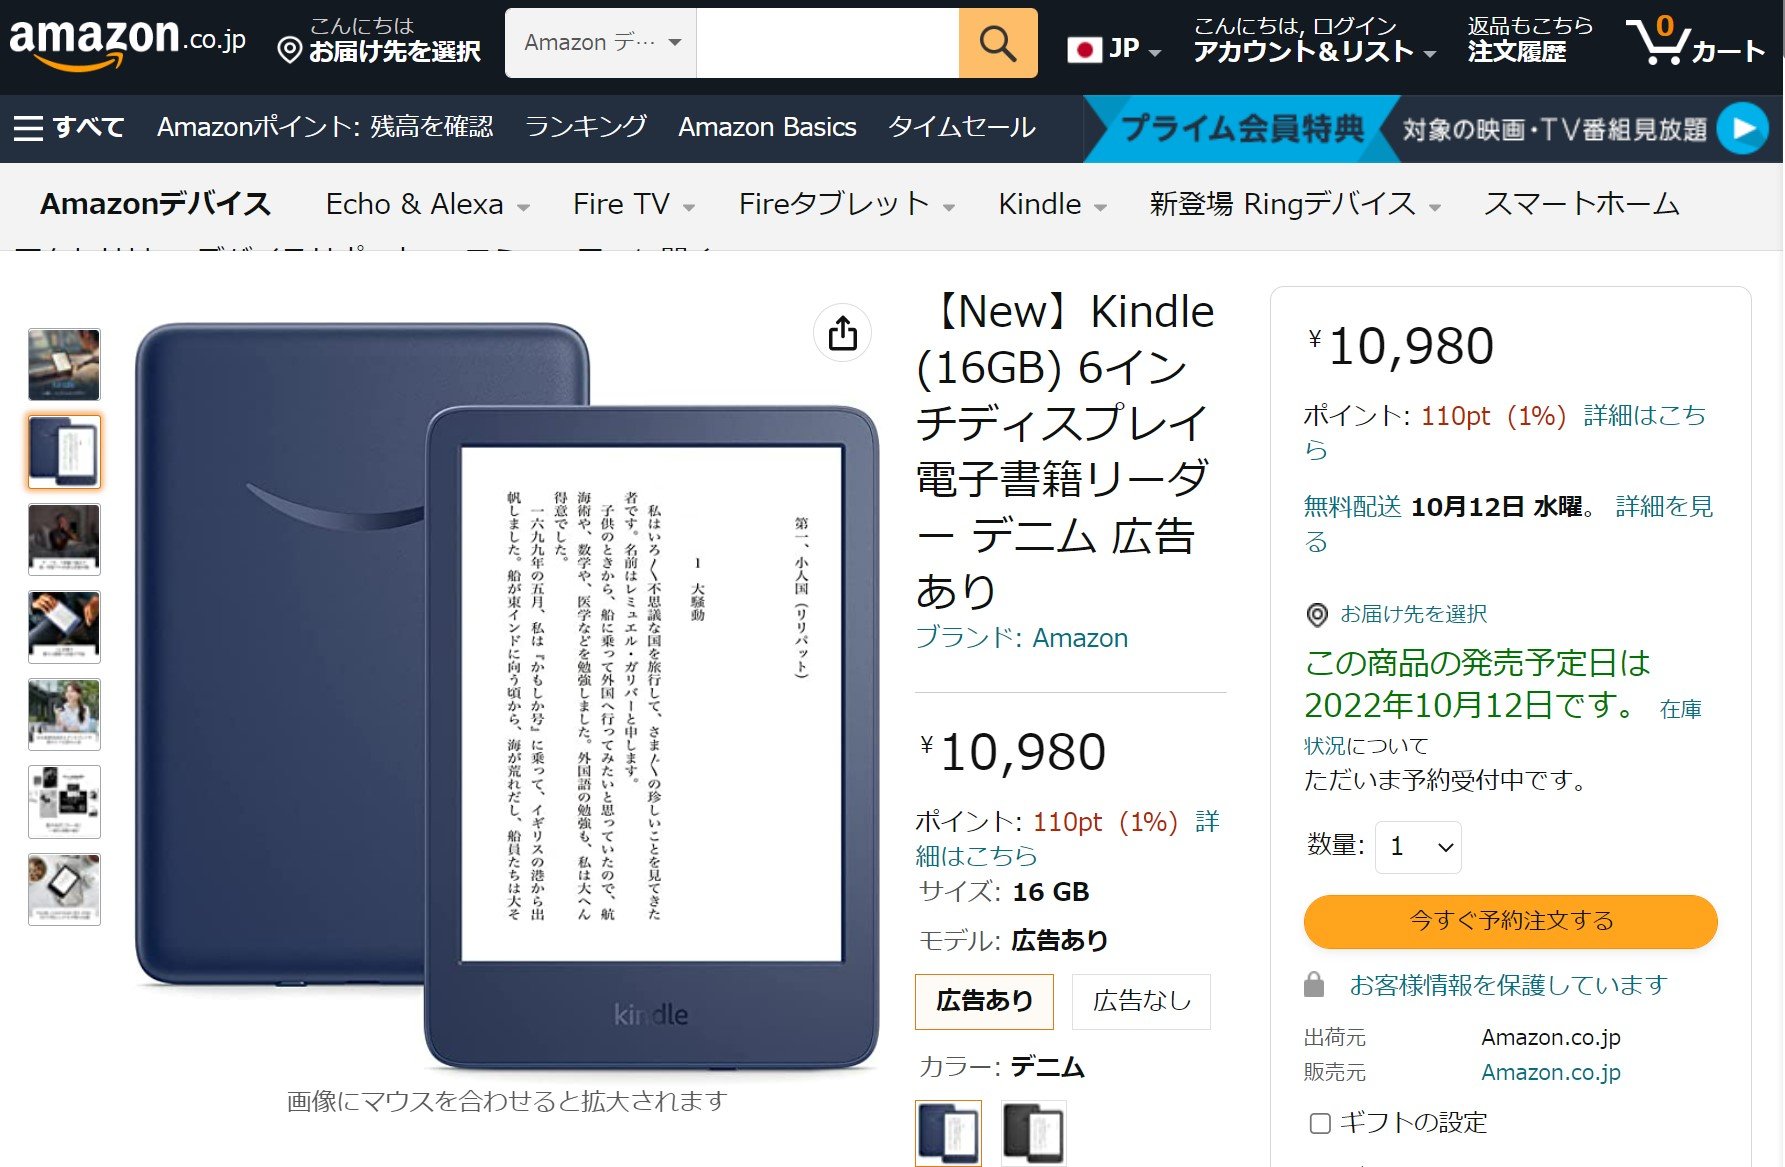 Amazon Kindle最安モデルの新型はUSB C、ppi、GBで1万円から